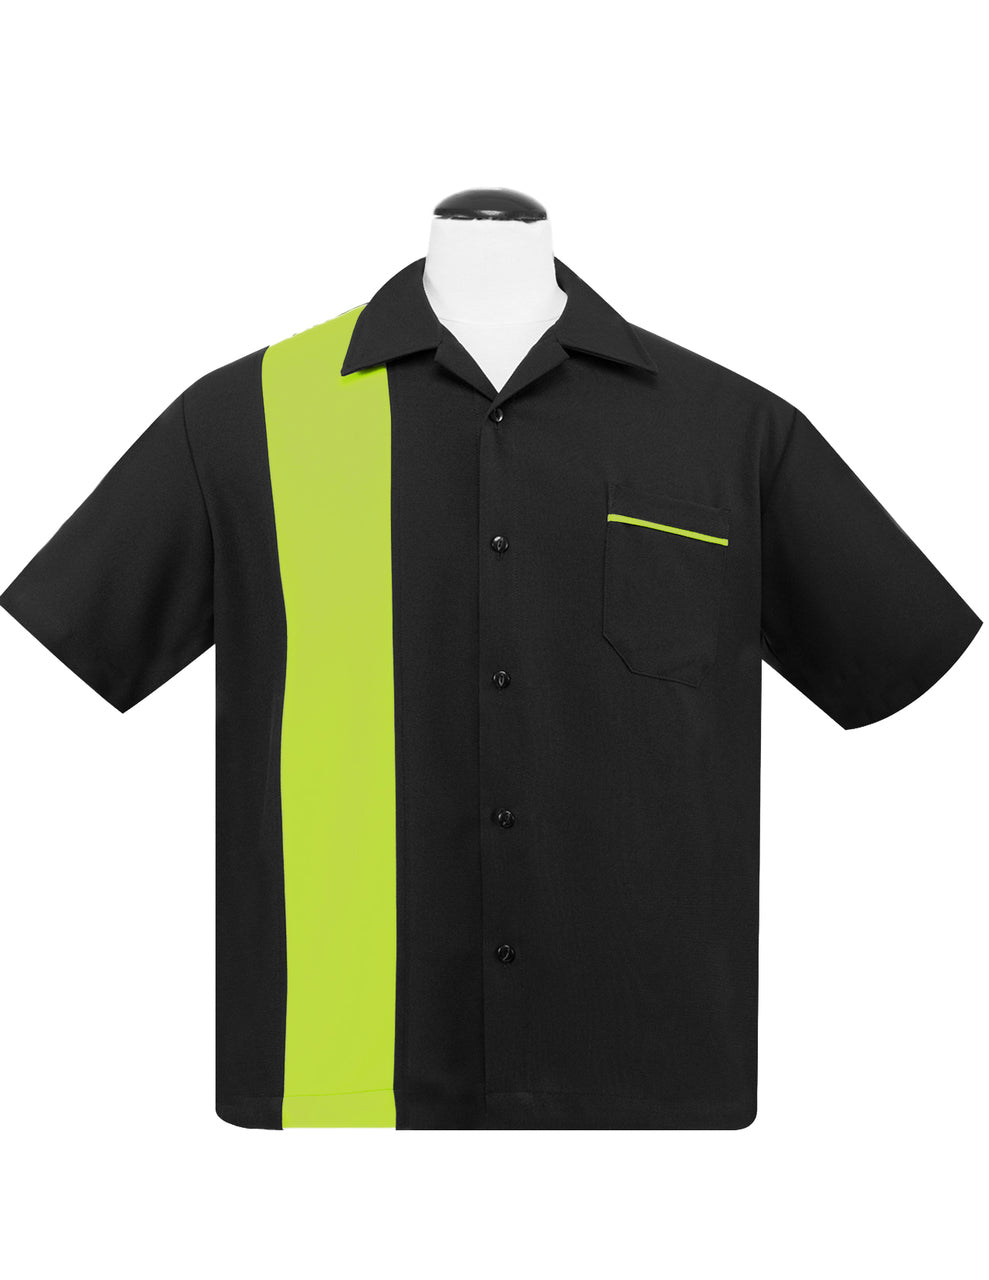 Shop Poplin Single Panel Bowling Shirt in Black/Lime Green Online ...